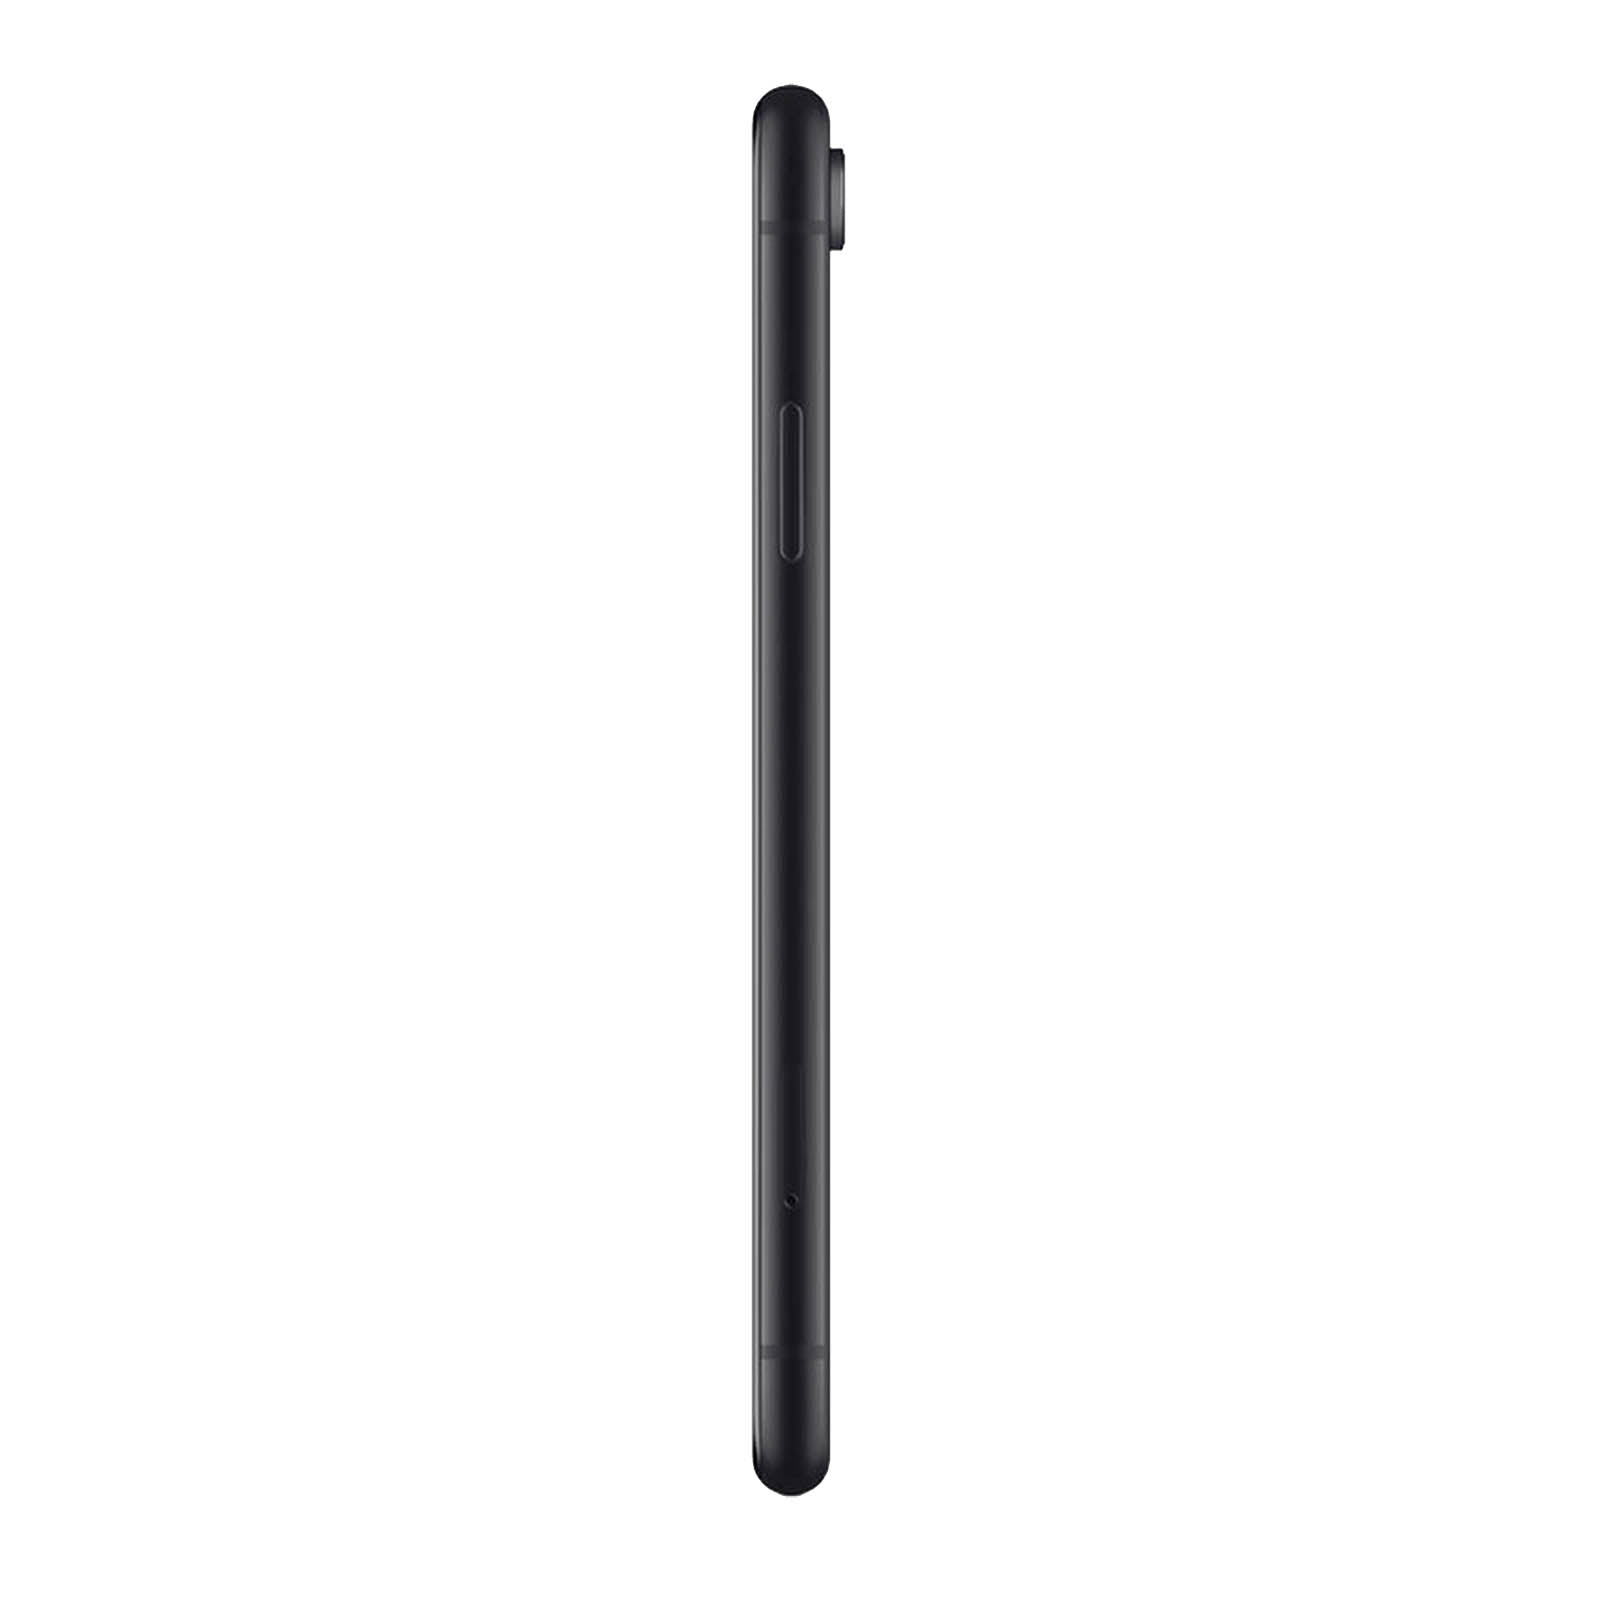 Apple iPhone XR 256GB Black Very Good - T-Mobile